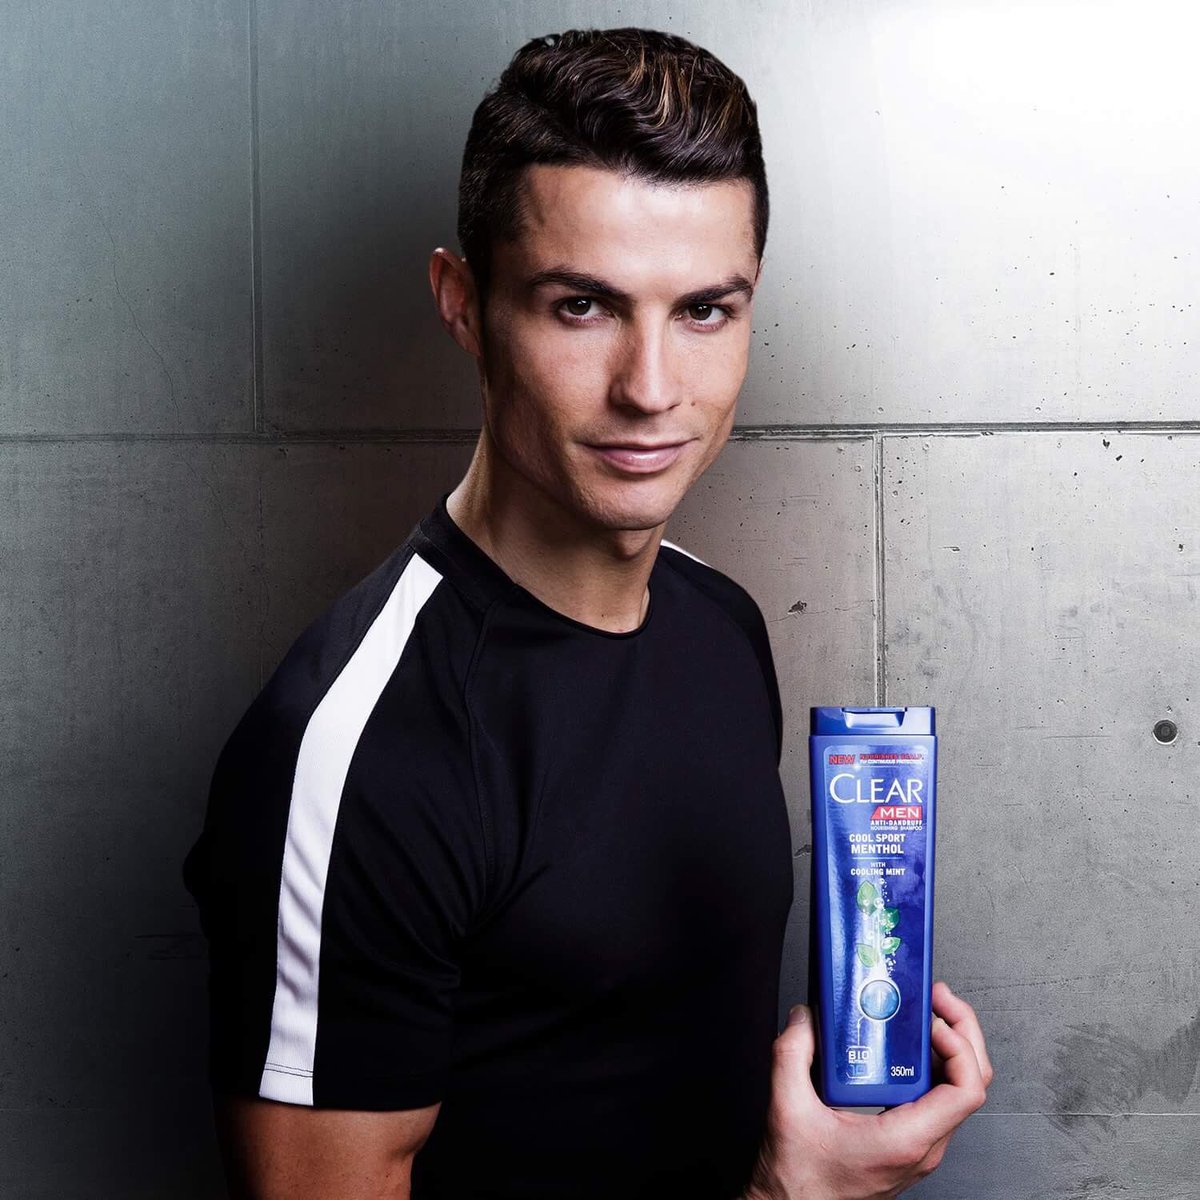 Cristiano Ronaldo Sponsors Partners Brand Endorsements Ambassador Associations Advertising  Clear